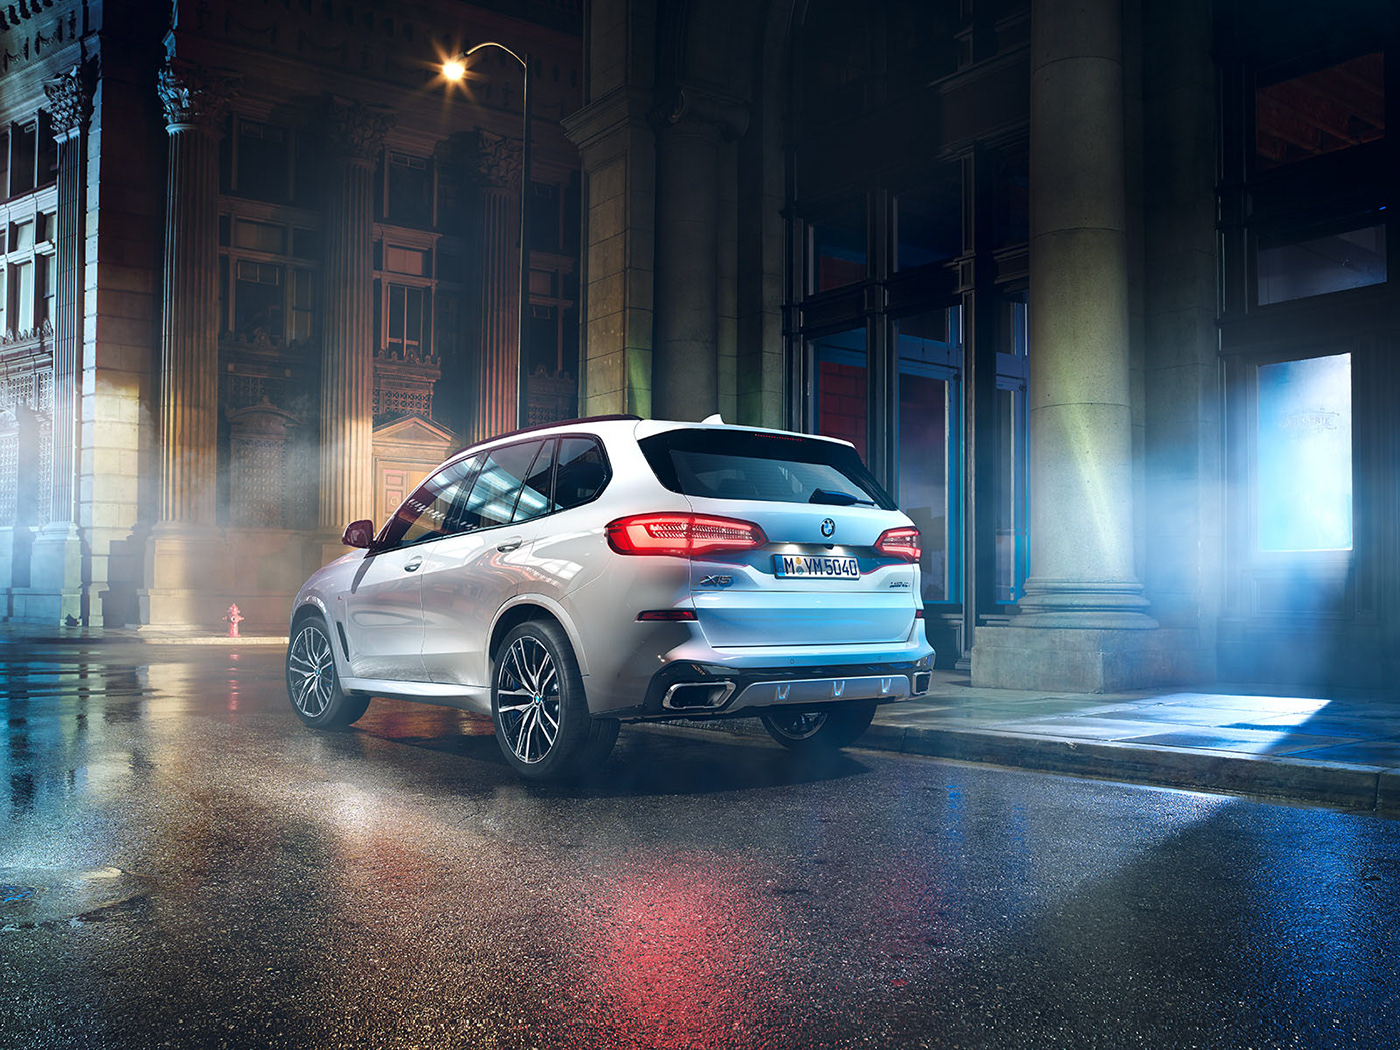 BMW X5 CGI emir haveric Serviceplan automotive   Advertising 